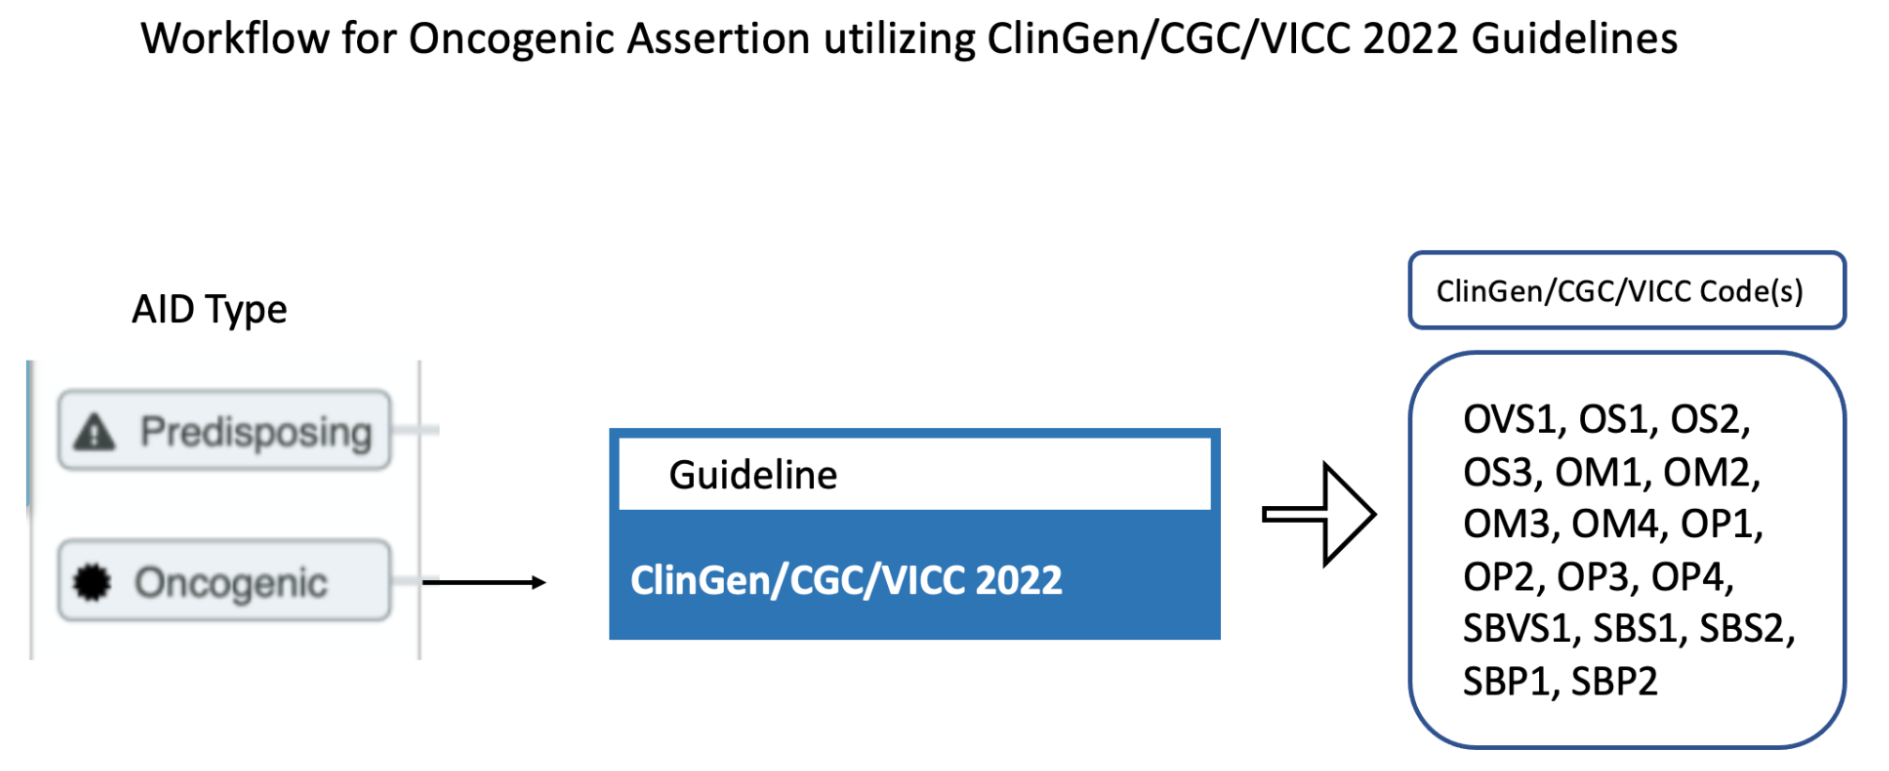 Oncogenic Assertions utilize the ClinGen/CGC/VICC 2022 Guideline.